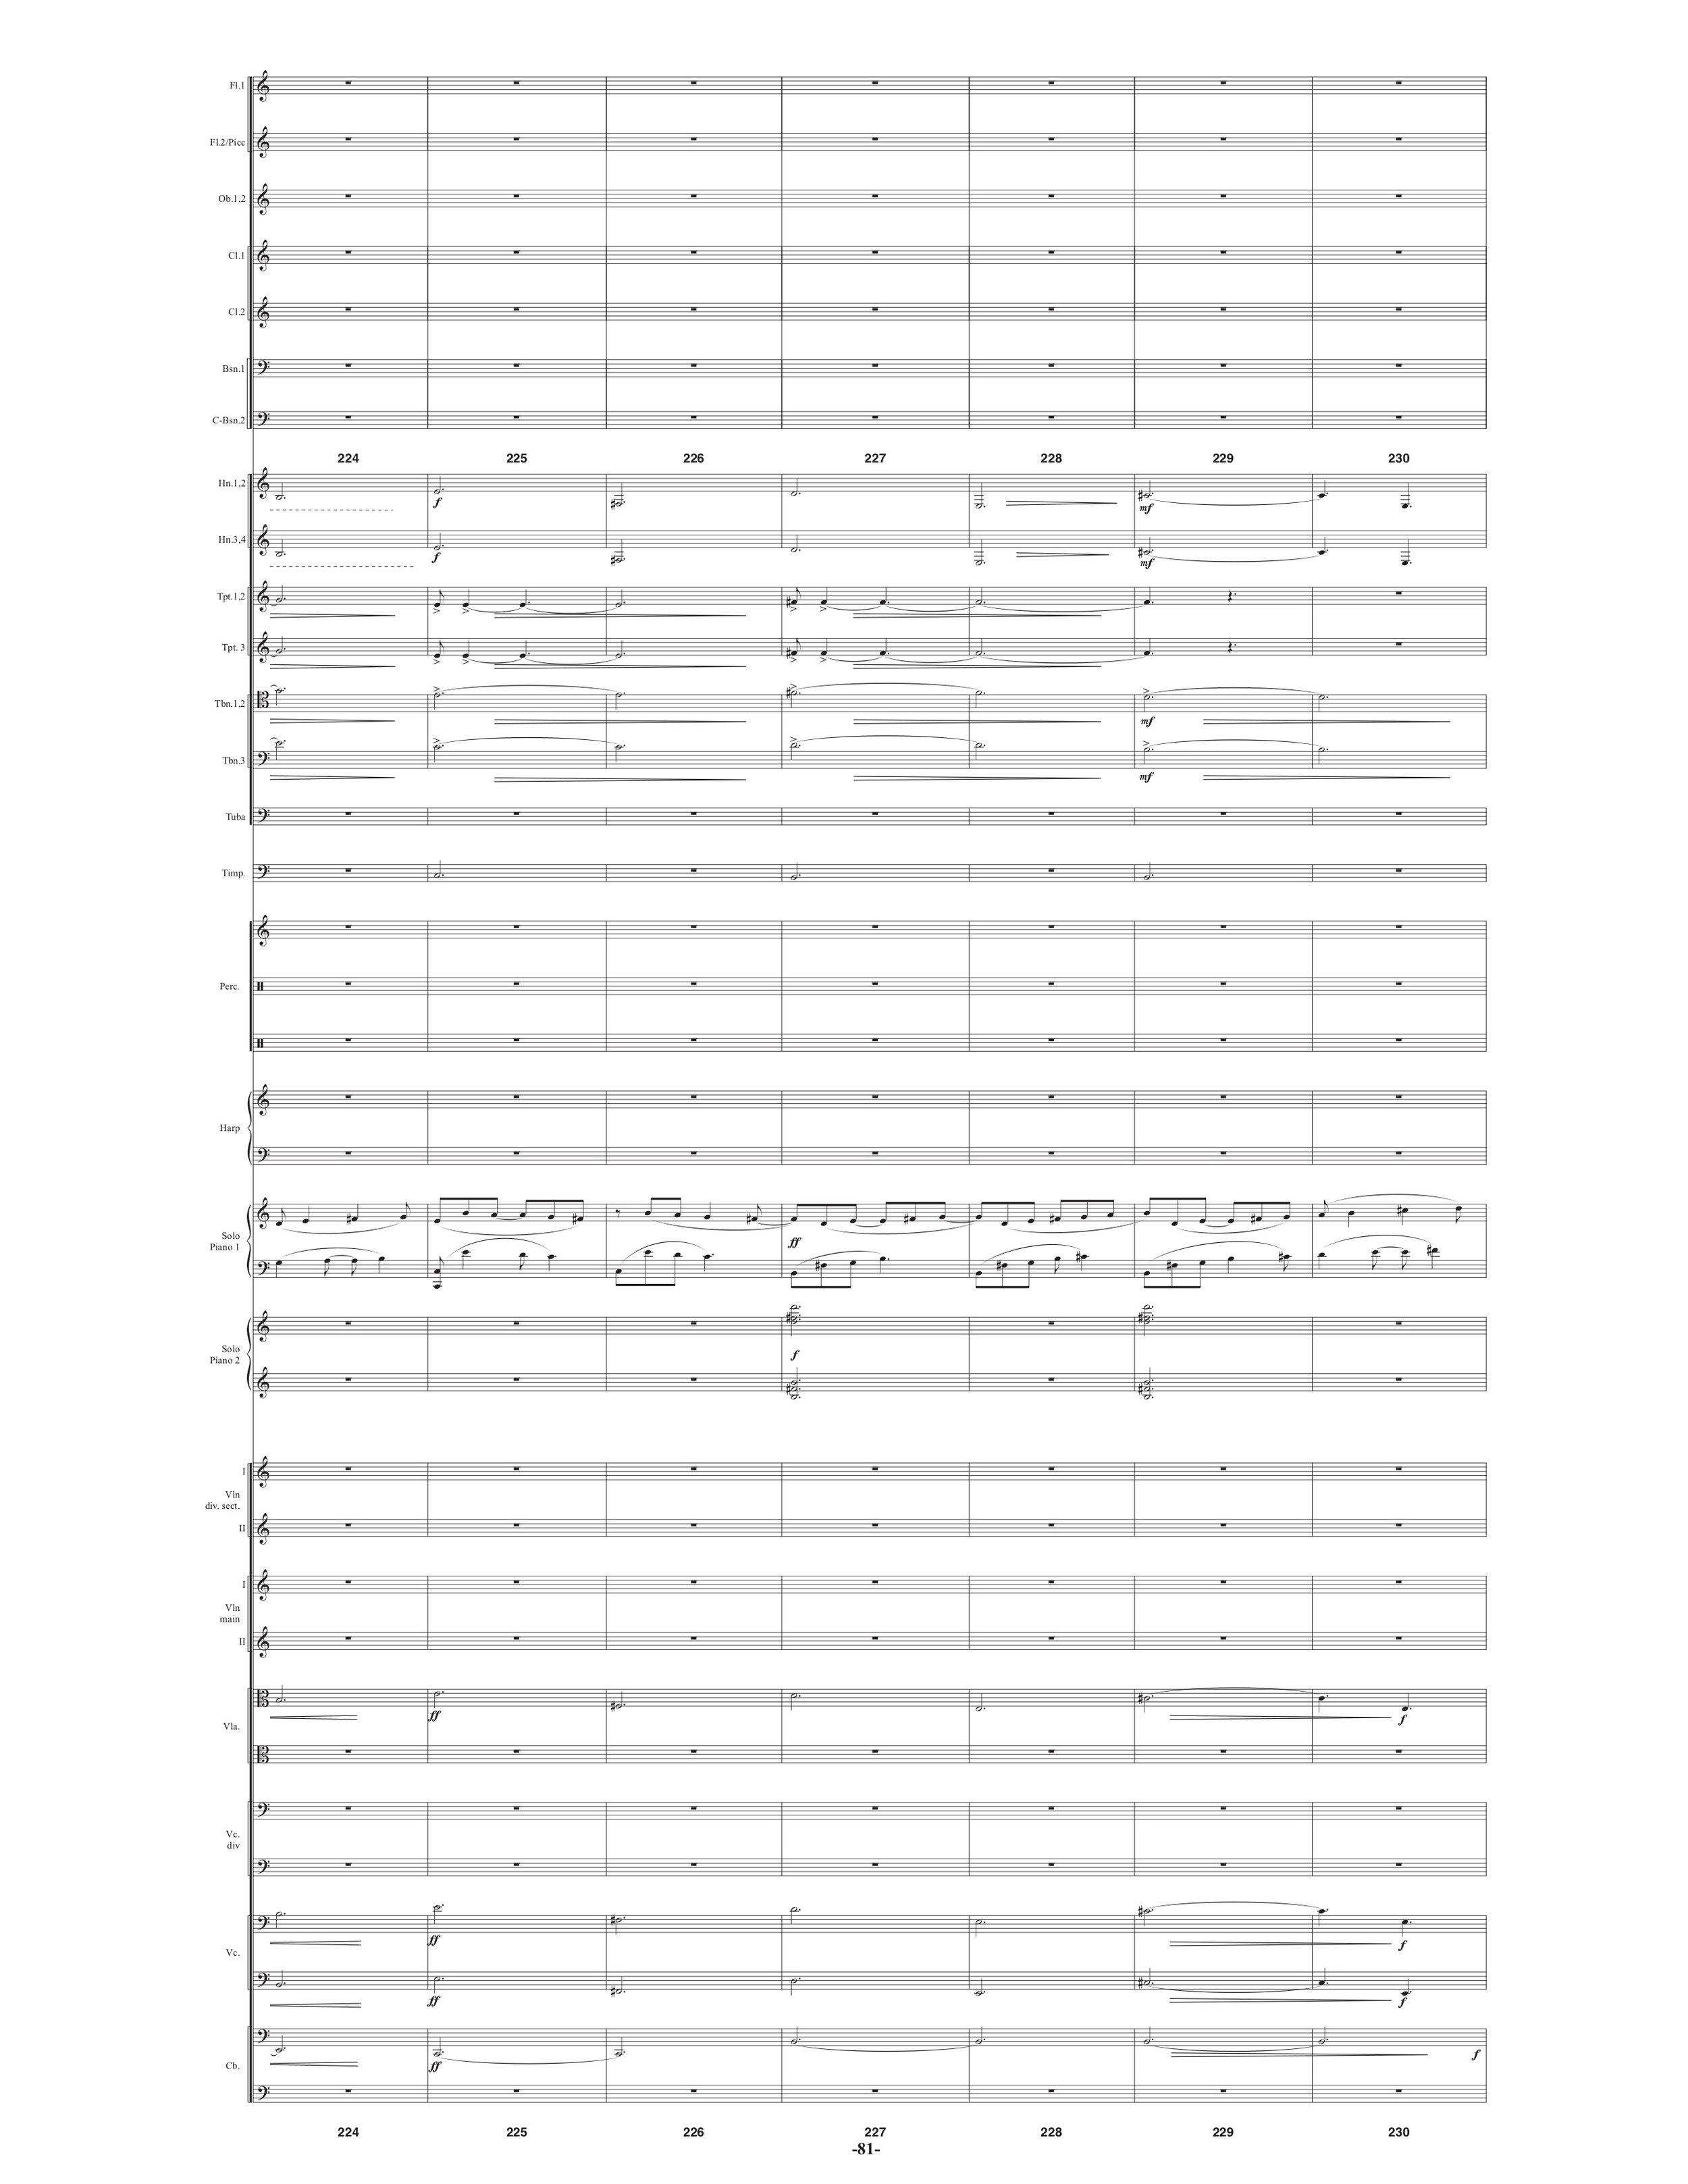 Symphony_Orch & 2 Pianos p86.jpg